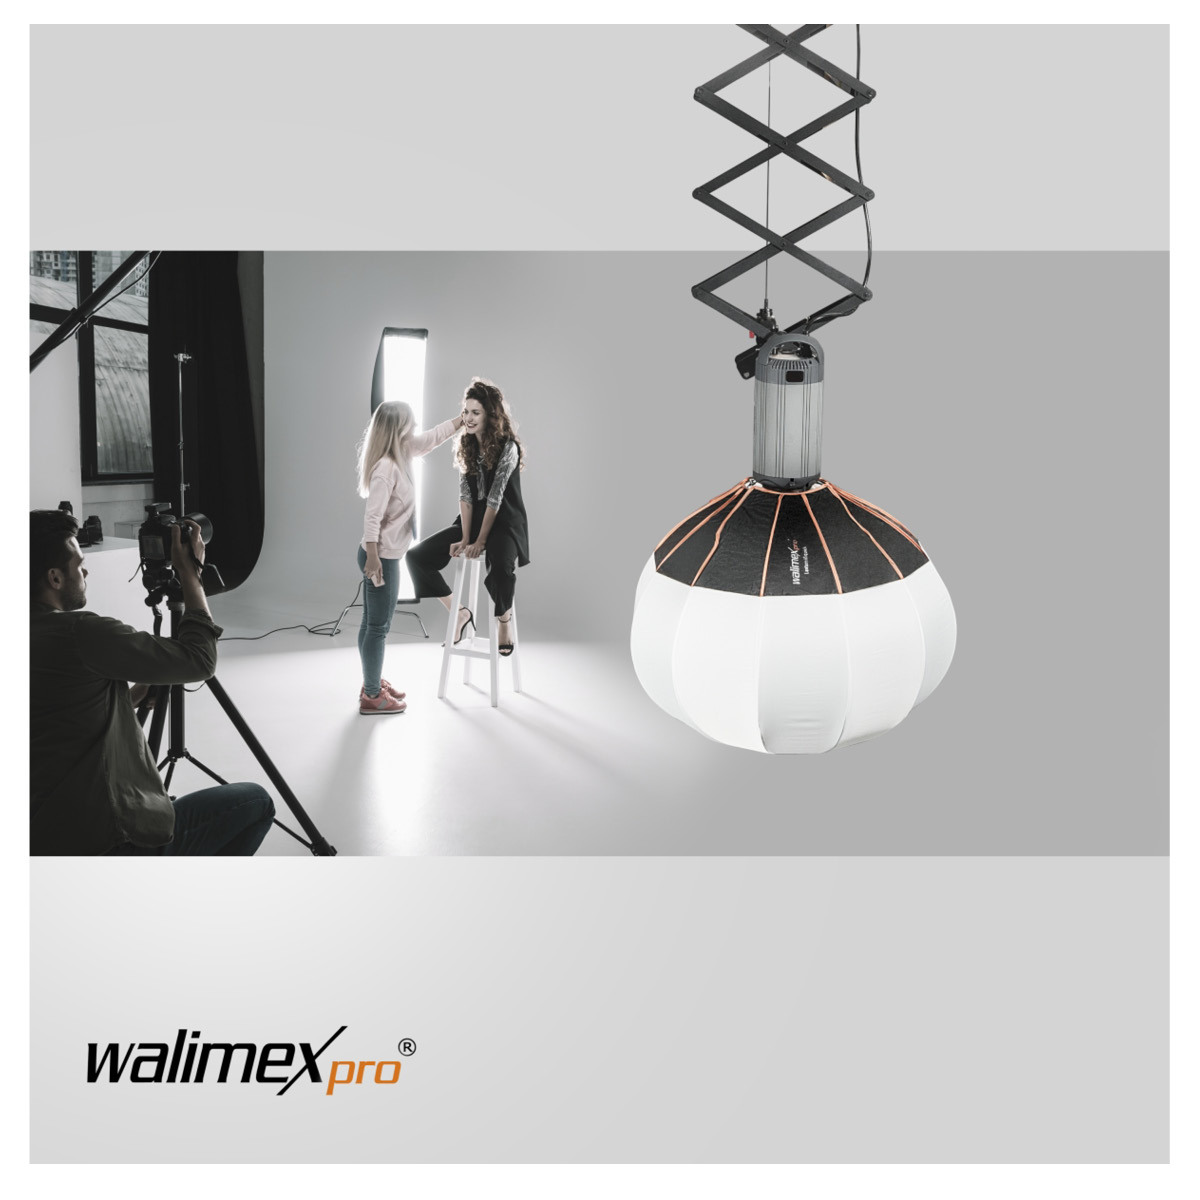 Walimex pro 360° Ambient Light Softbox 80 Visatec